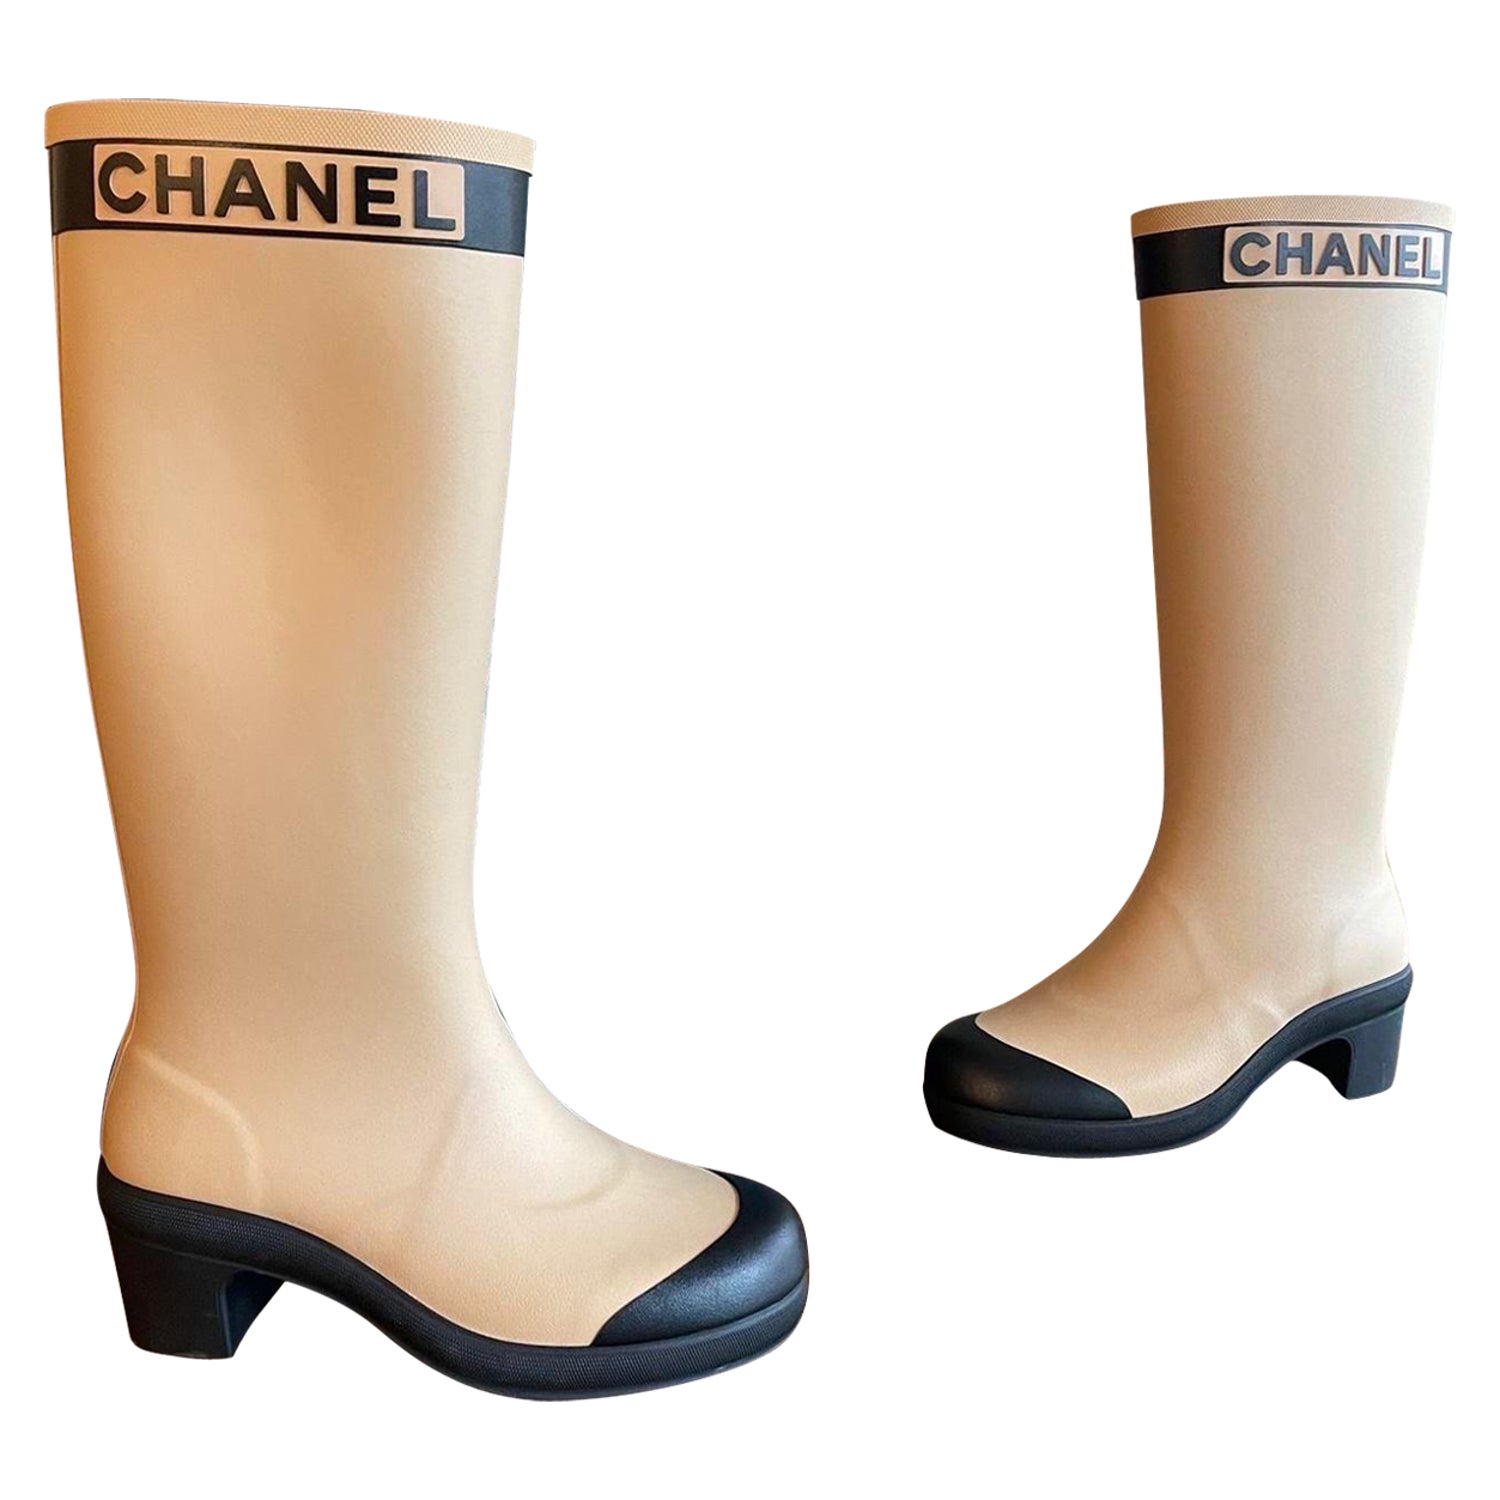 CHANEL Winter & Rain Boots for Women - Poshmark